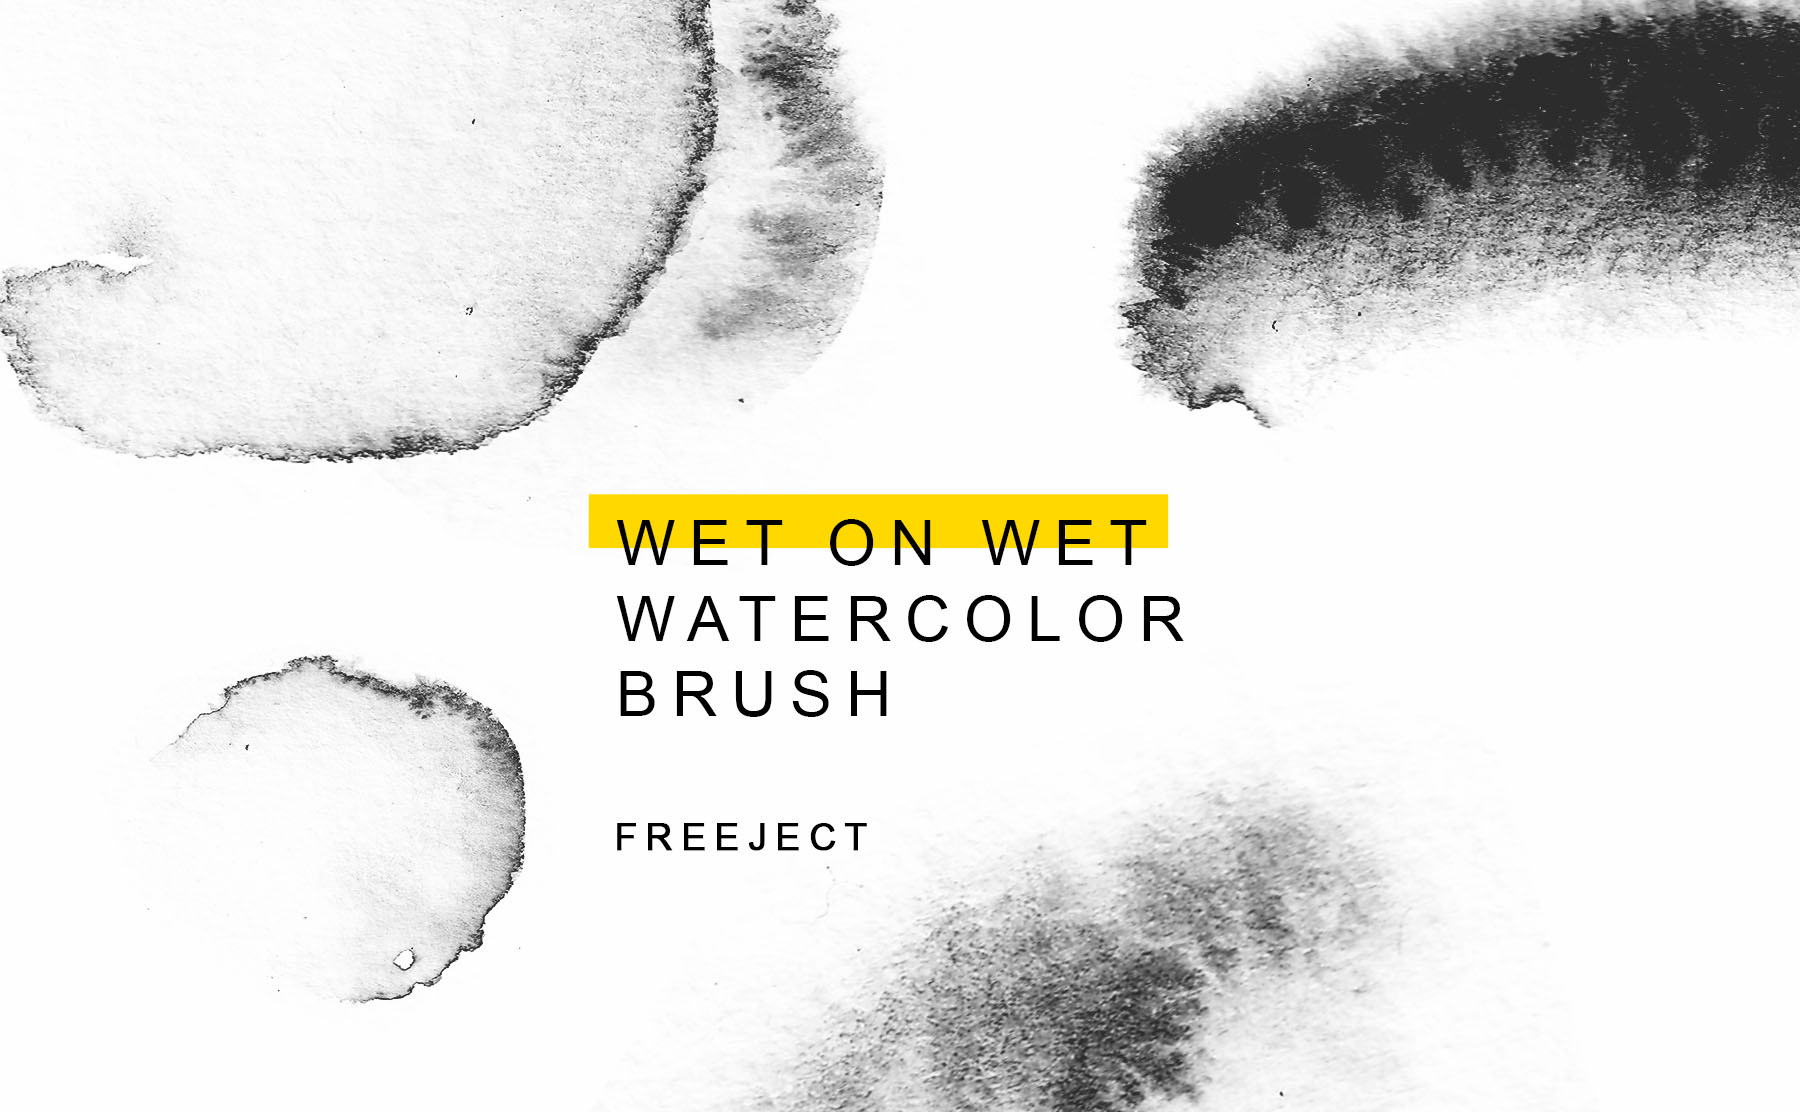 High-Res Watercolor Photoshop Brushes - Free Photoshop Brushes at Brusheezy!